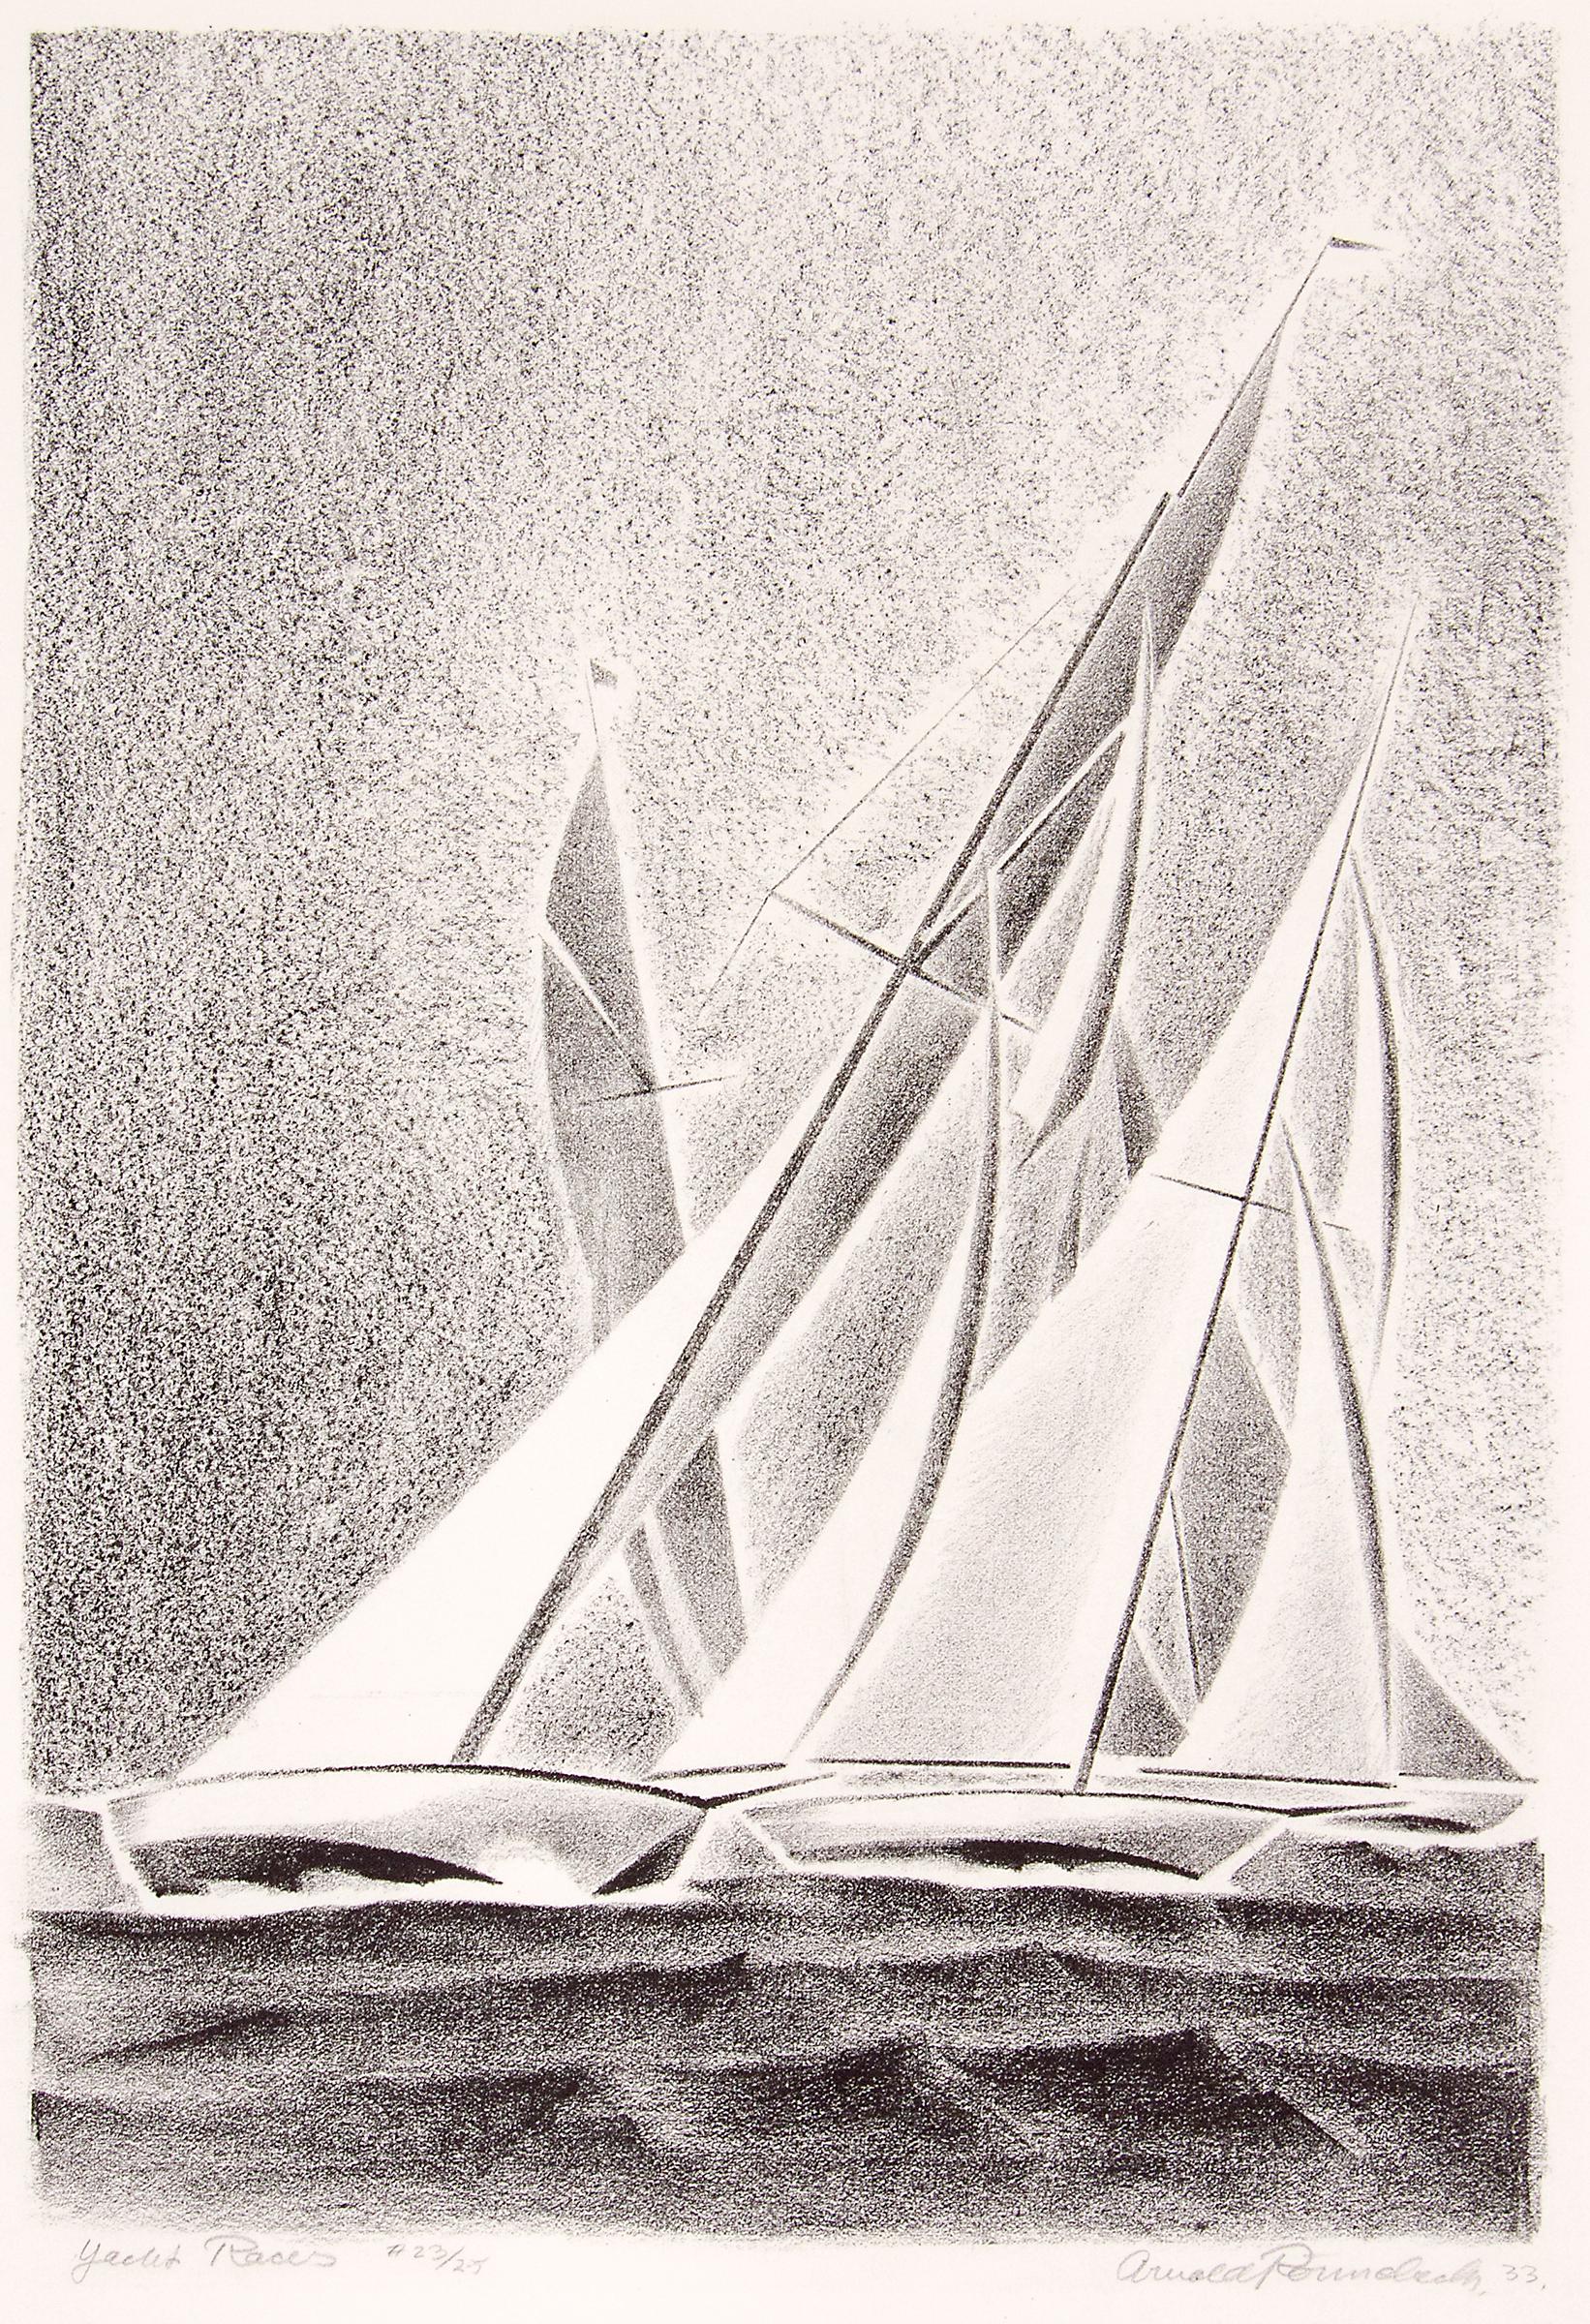 Arnold Ronnebeck Figurative Print - Yacht Races, Grand Lake, Colorado, 1933, Sailboats, Black & White lithograph